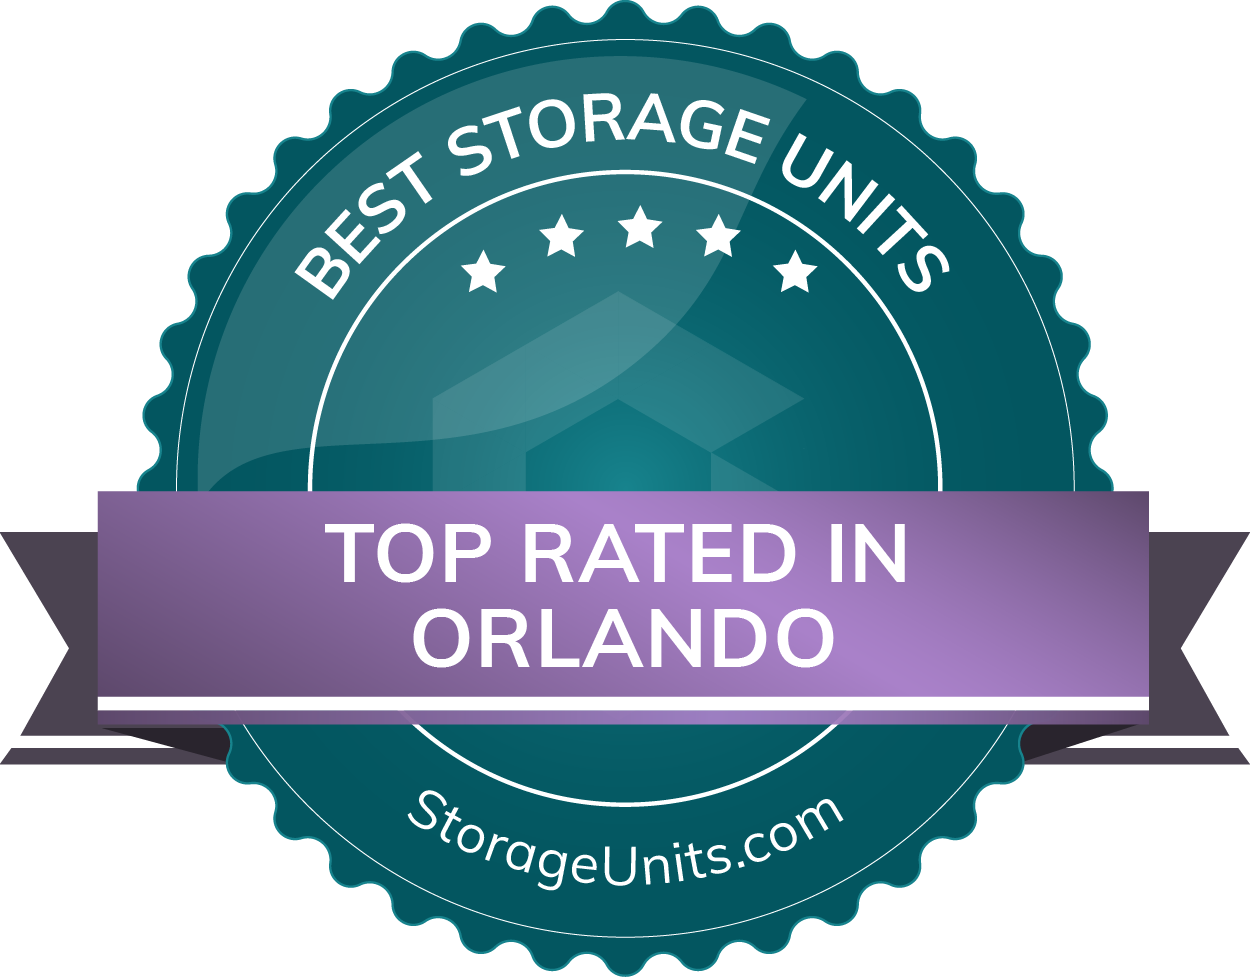 Best Self Storage Units in Orlando, Florida of 2022